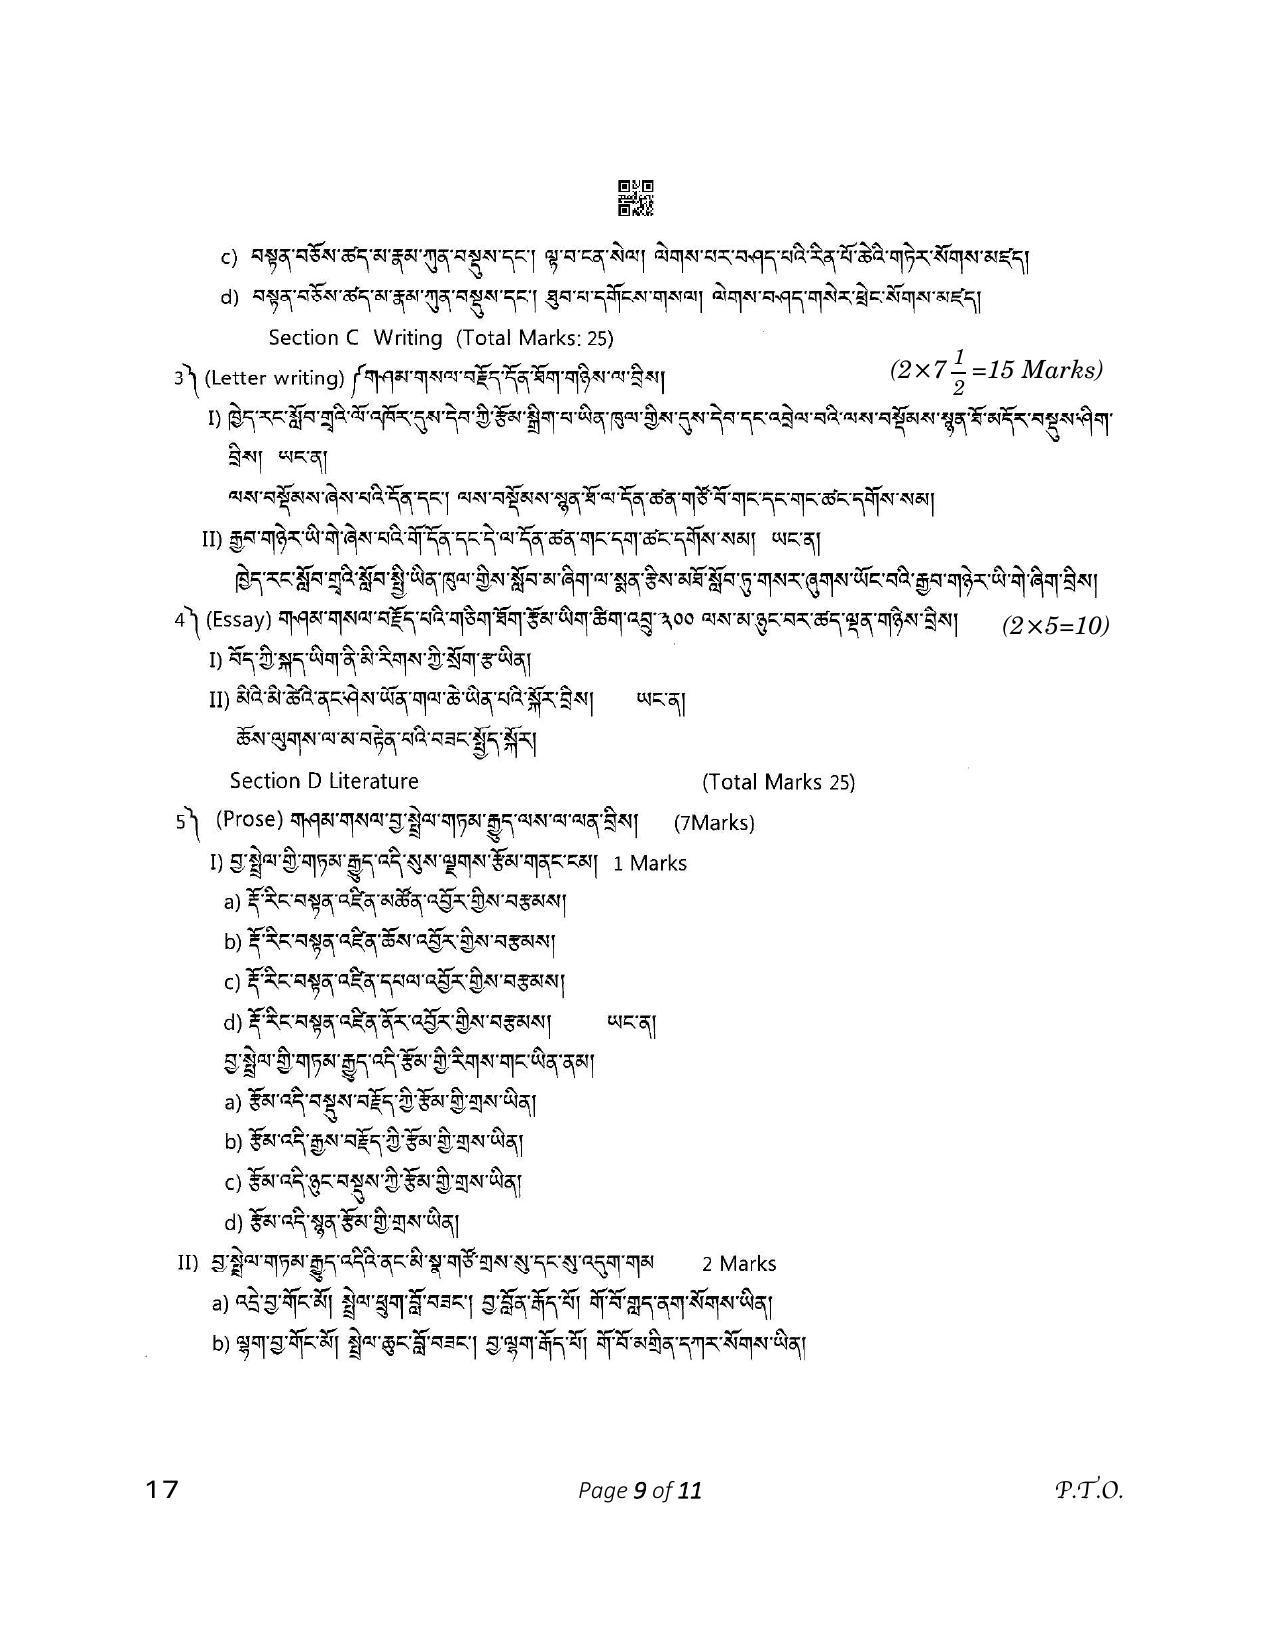 CBSE Class 12 17_Tibetan 2023 Question Paper - Page 9